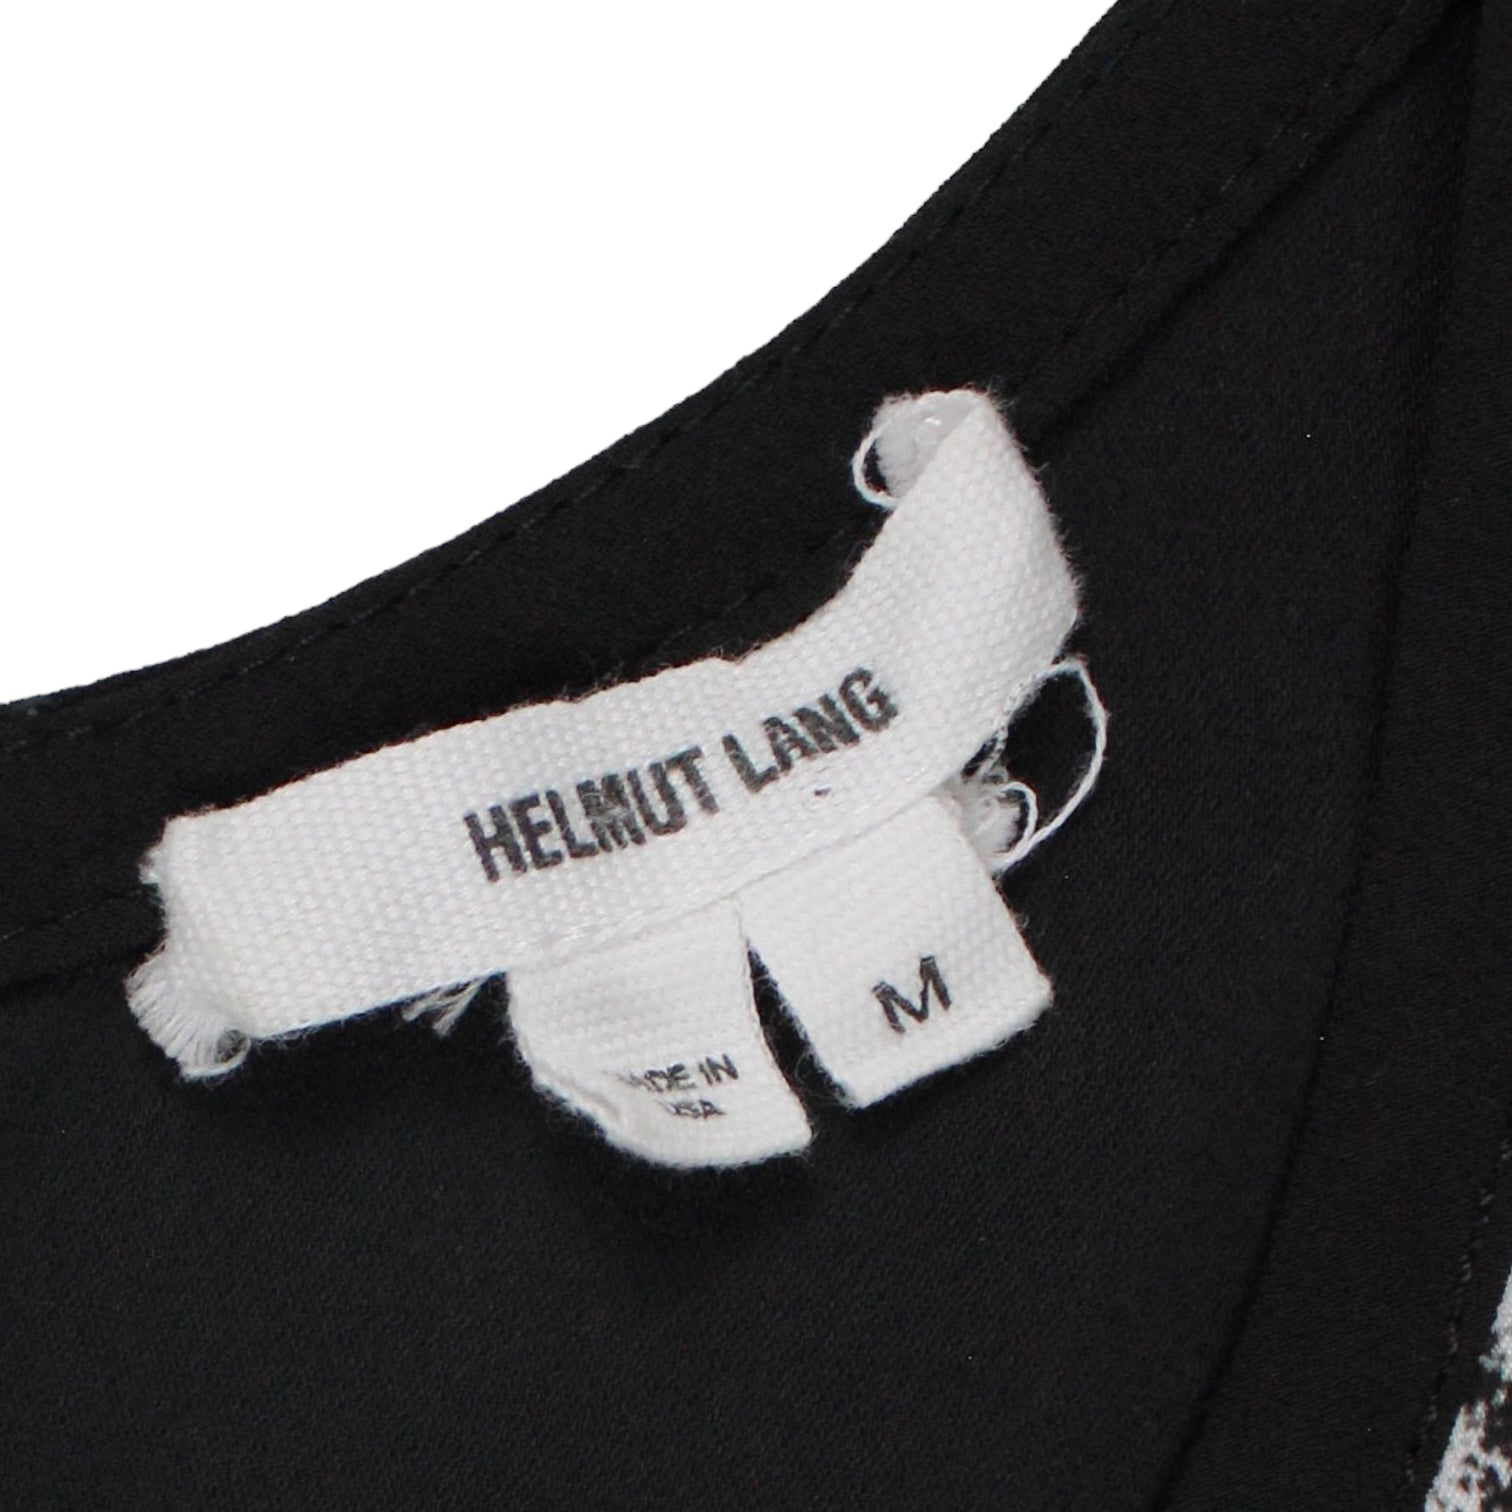 Helmut Lang Black/White Print Top